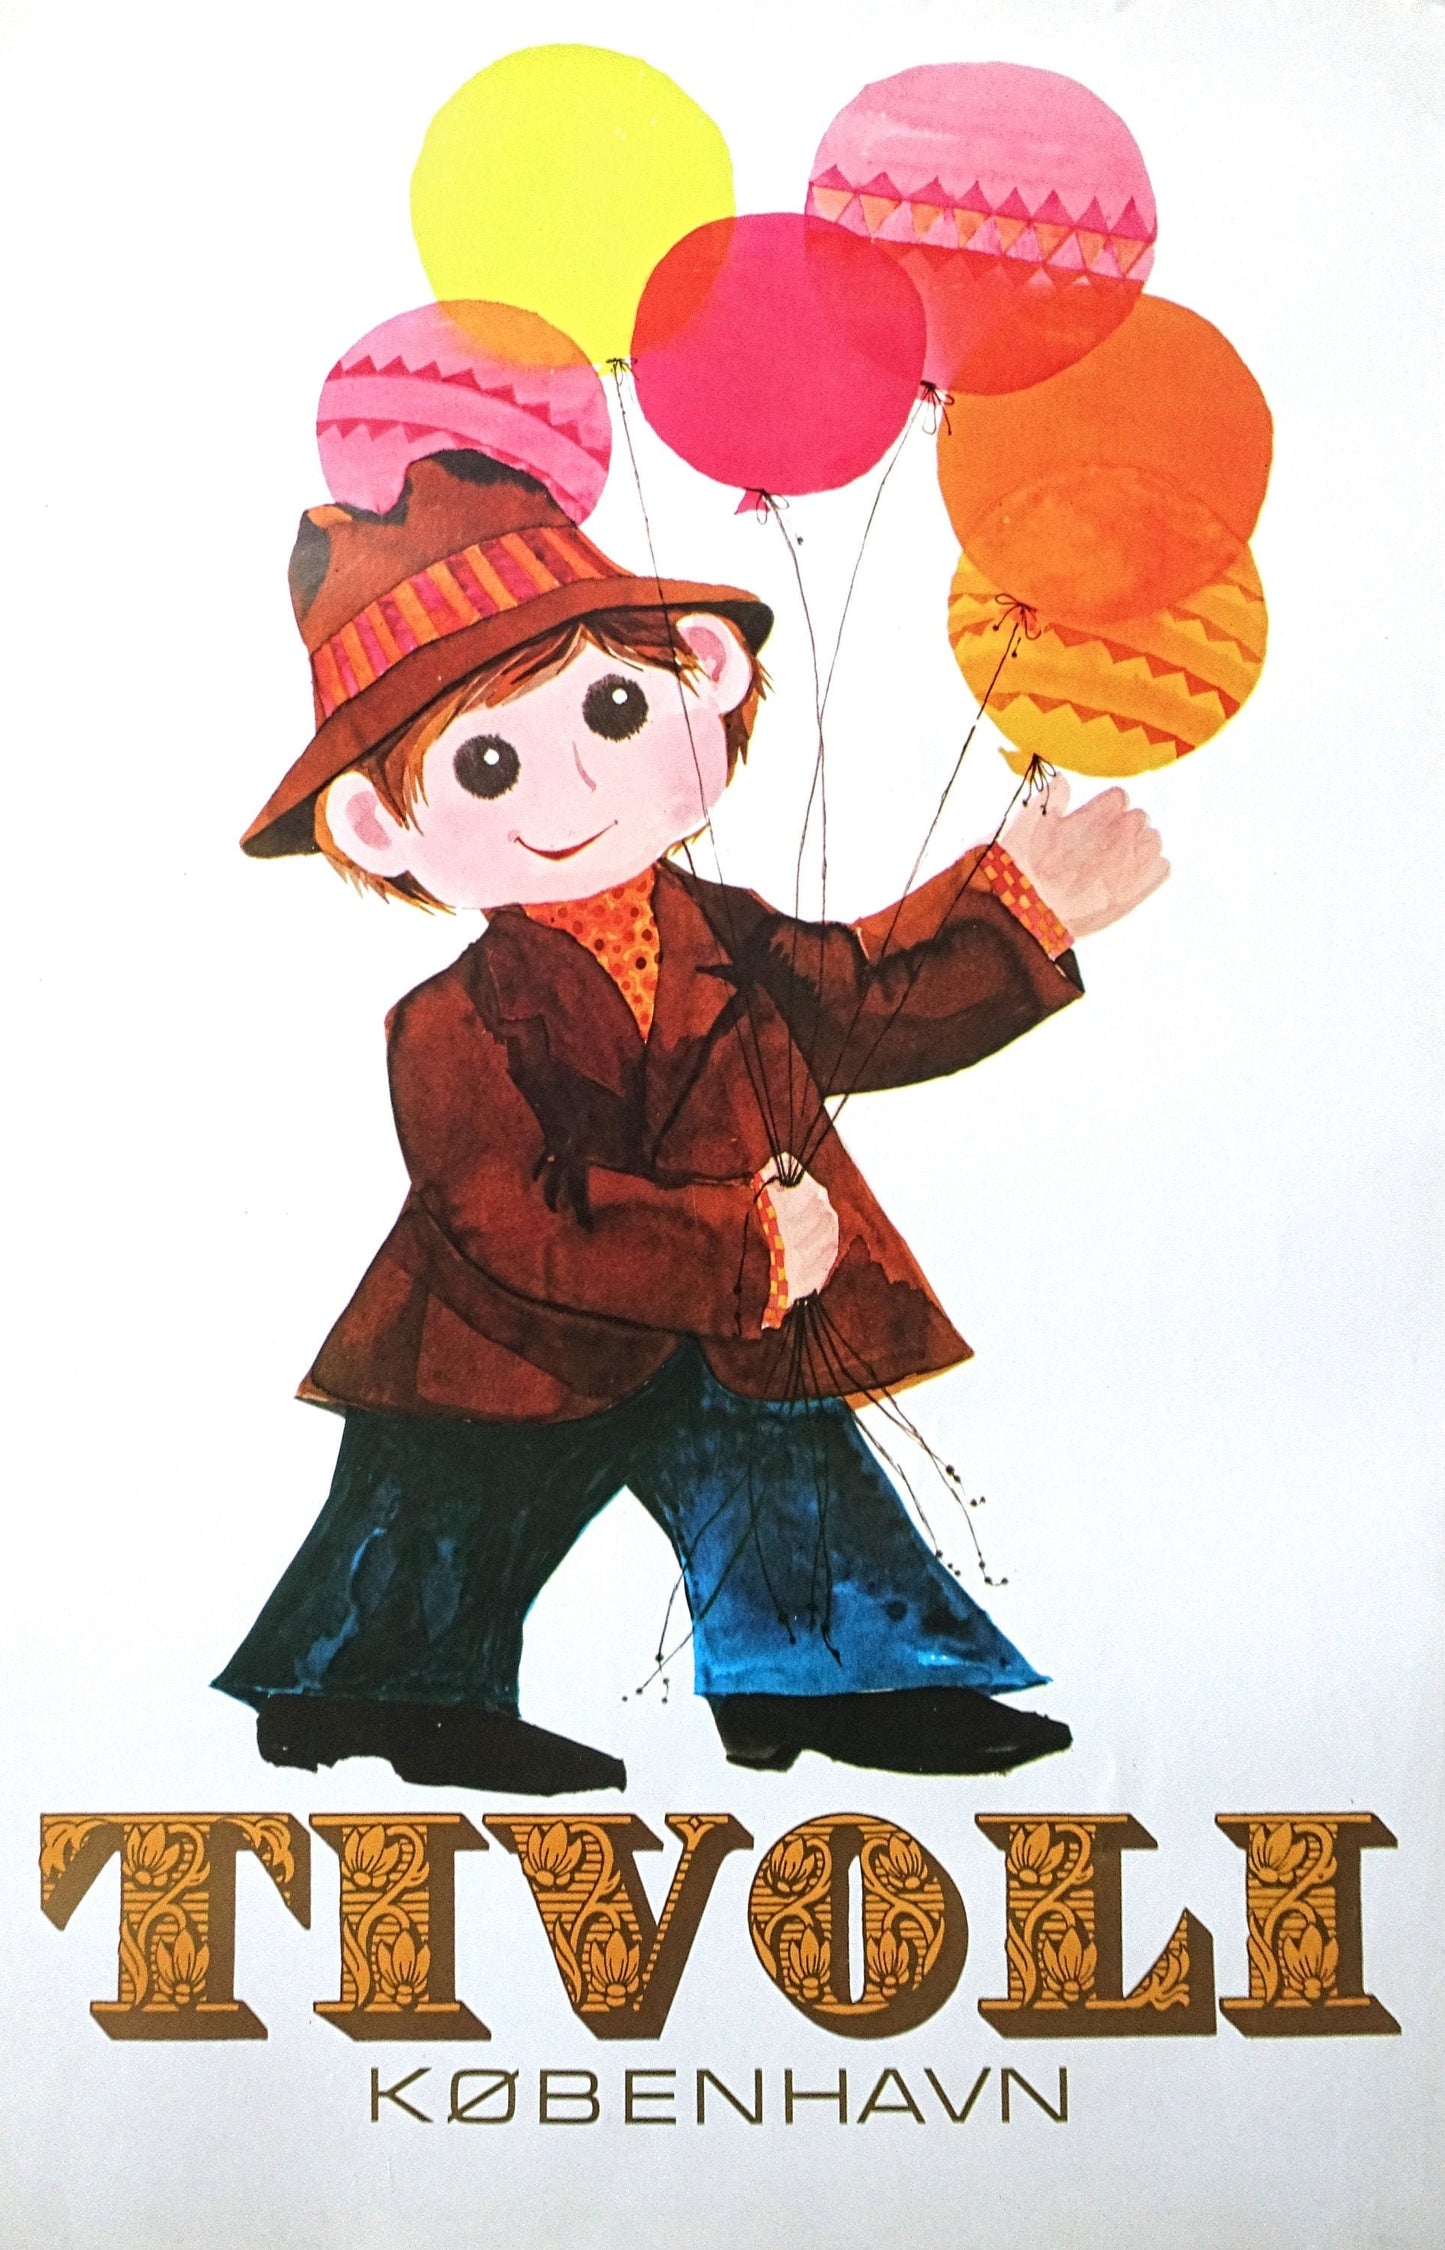 1972 Tivoli Gardens by Richardt Branderup (Balloon man) - Original Vintage Poster